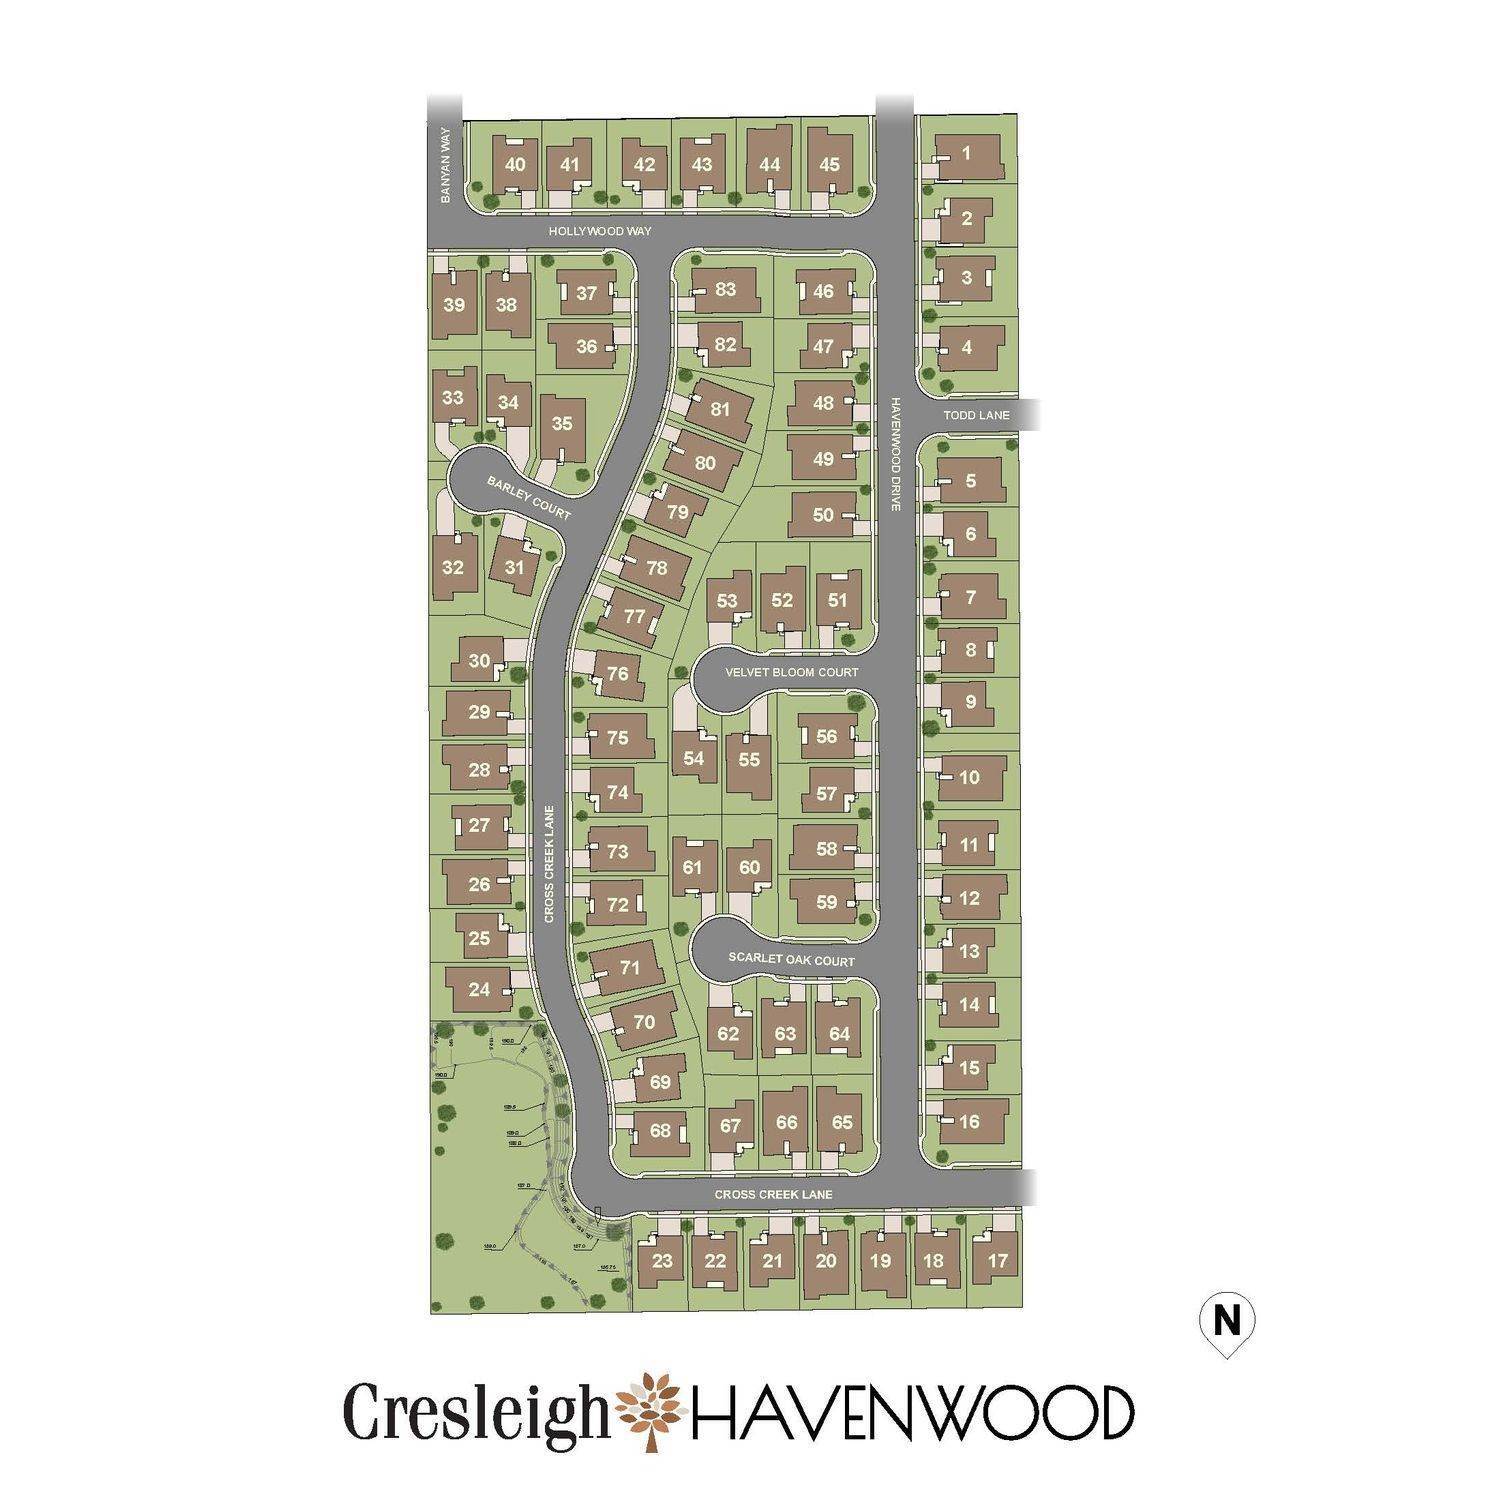 2. Cresleigh Havenwood建於 758 Havenwood Drive, Lincoln, CA 95648